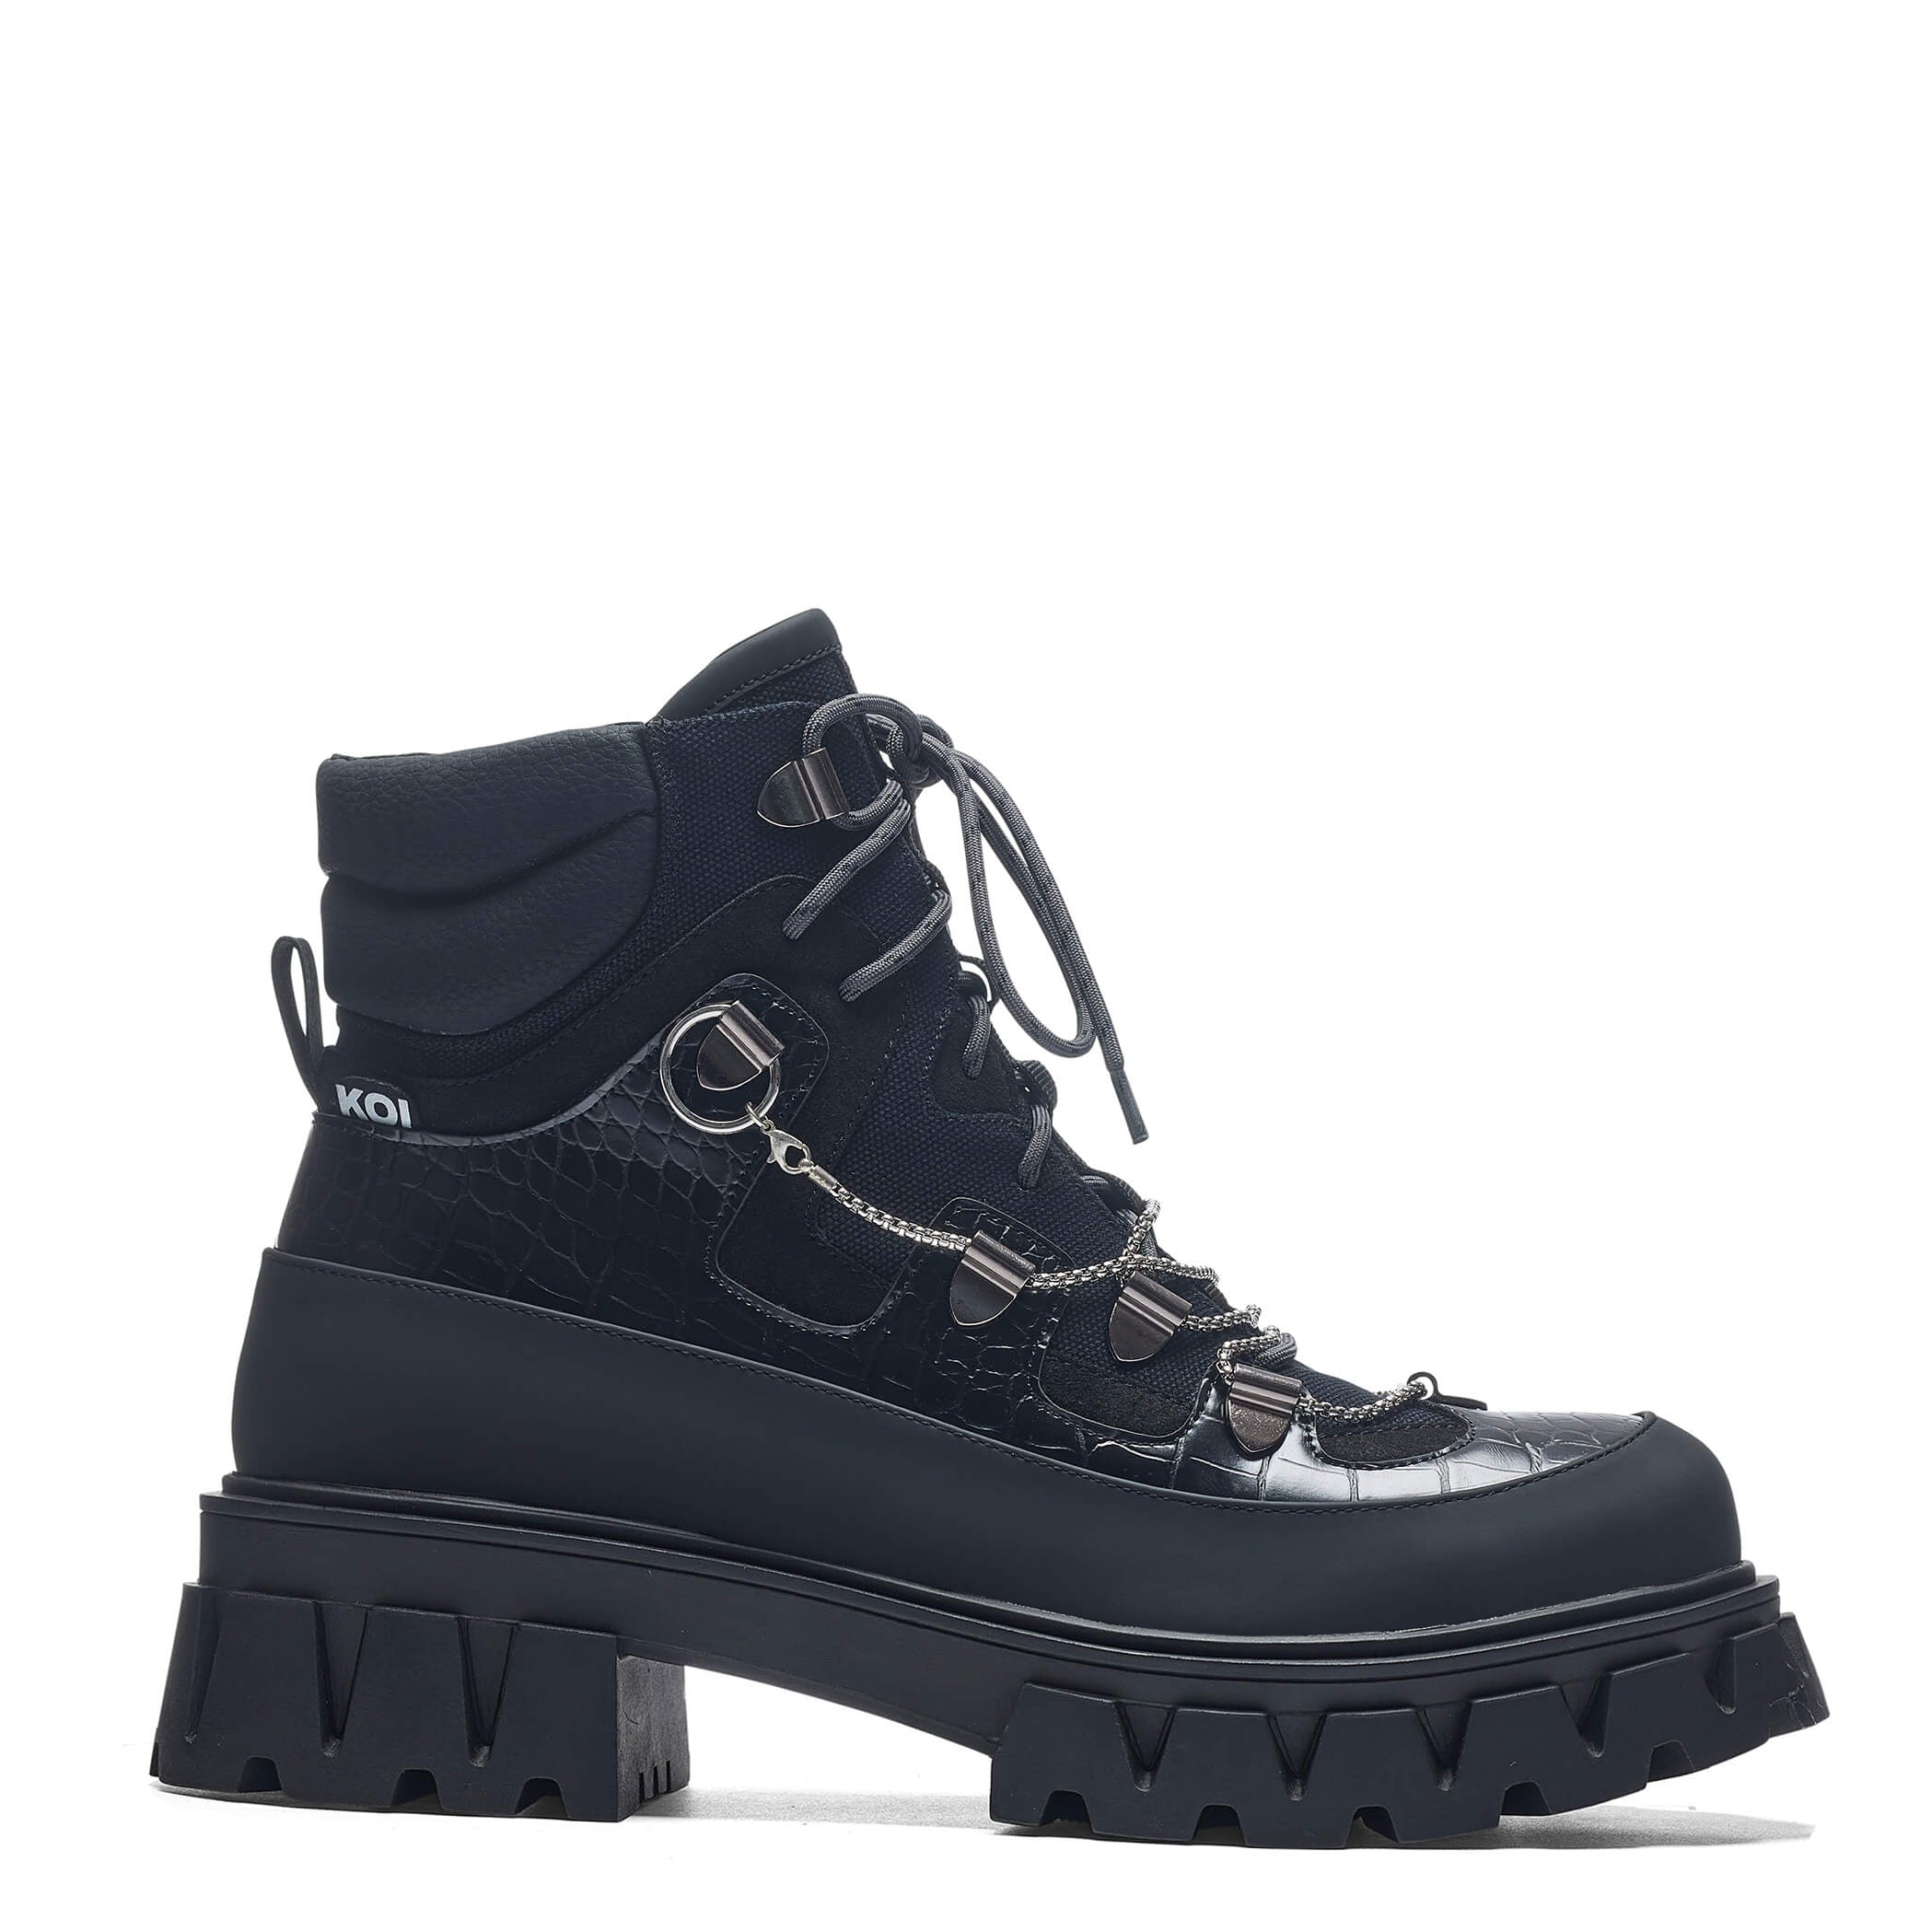 The Koi Reaper Men's Hiking Boots - Ebony Croc – KOI footwear